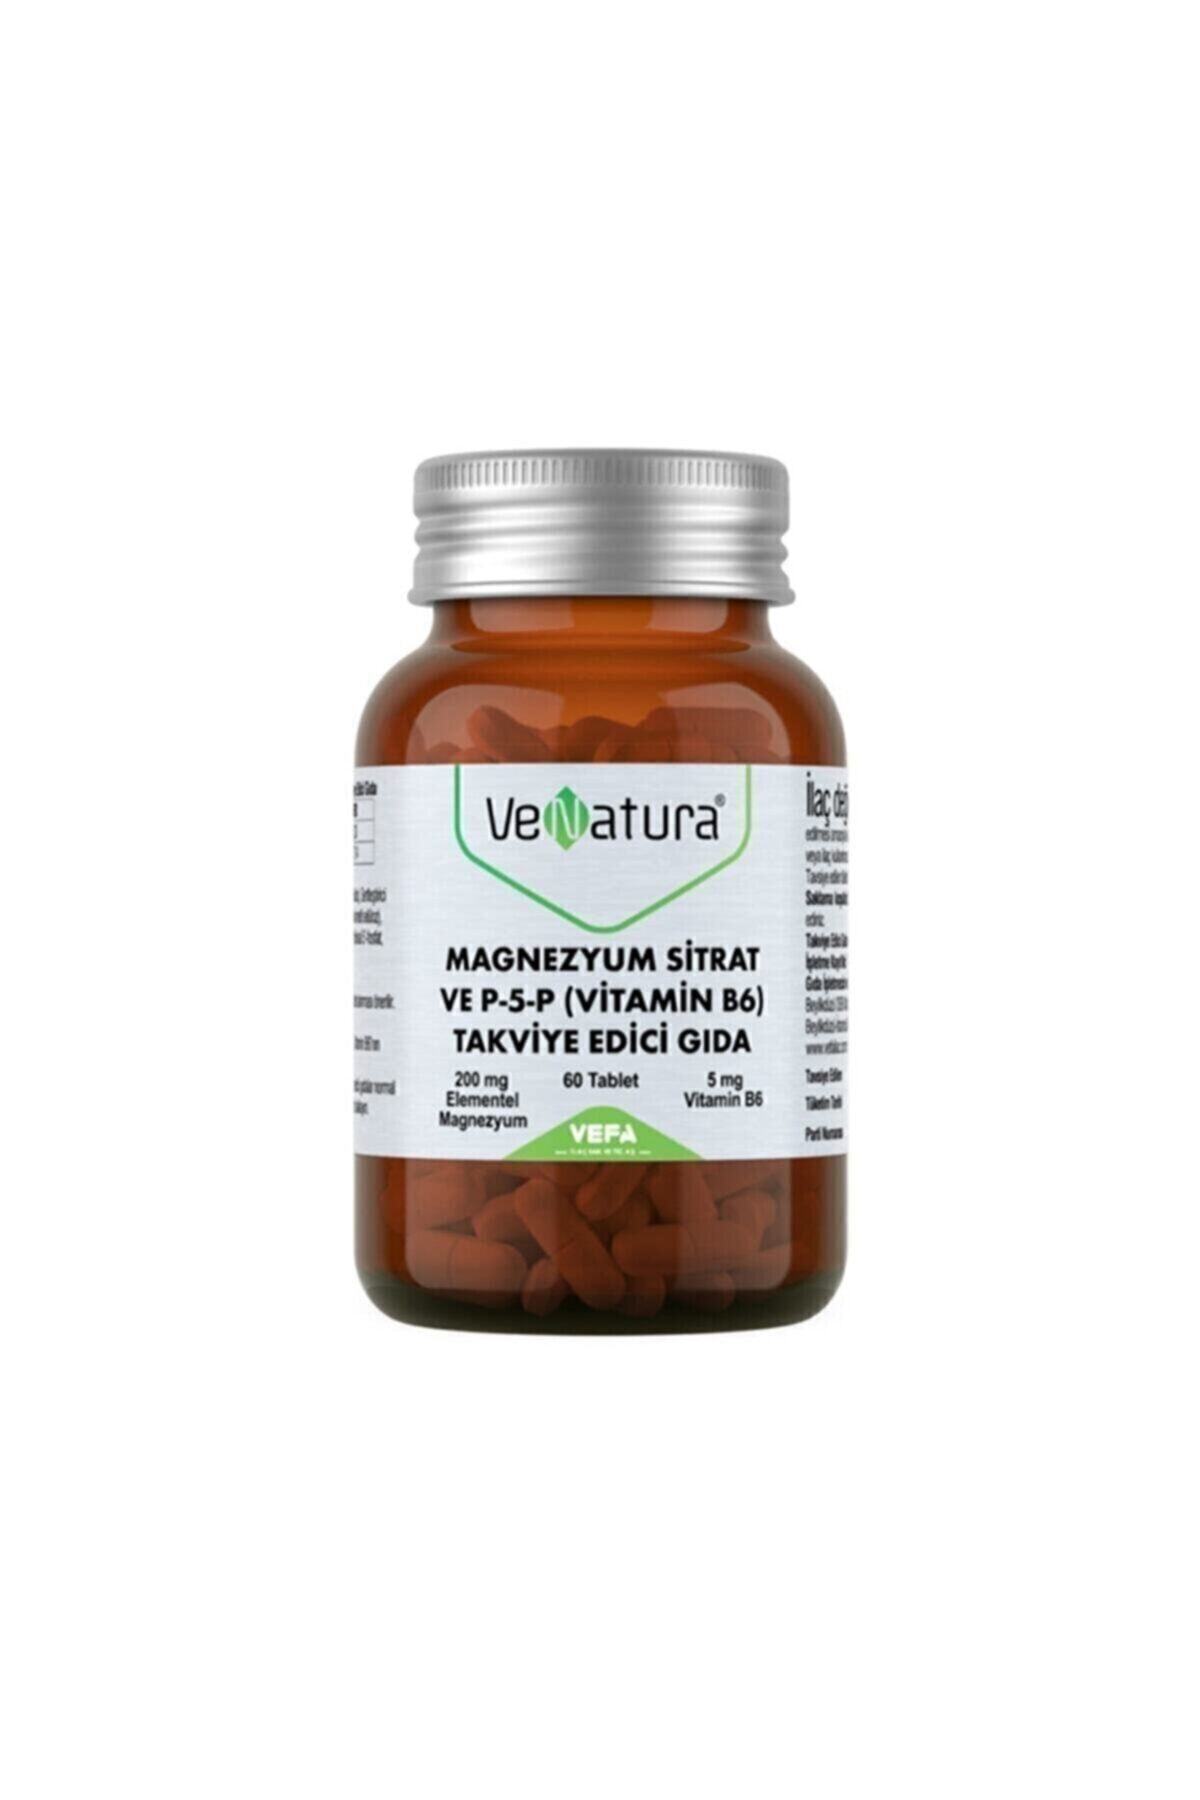 VeNatura Magnezyum Sitrat P-5-p Vitamin B6 60 Tablet